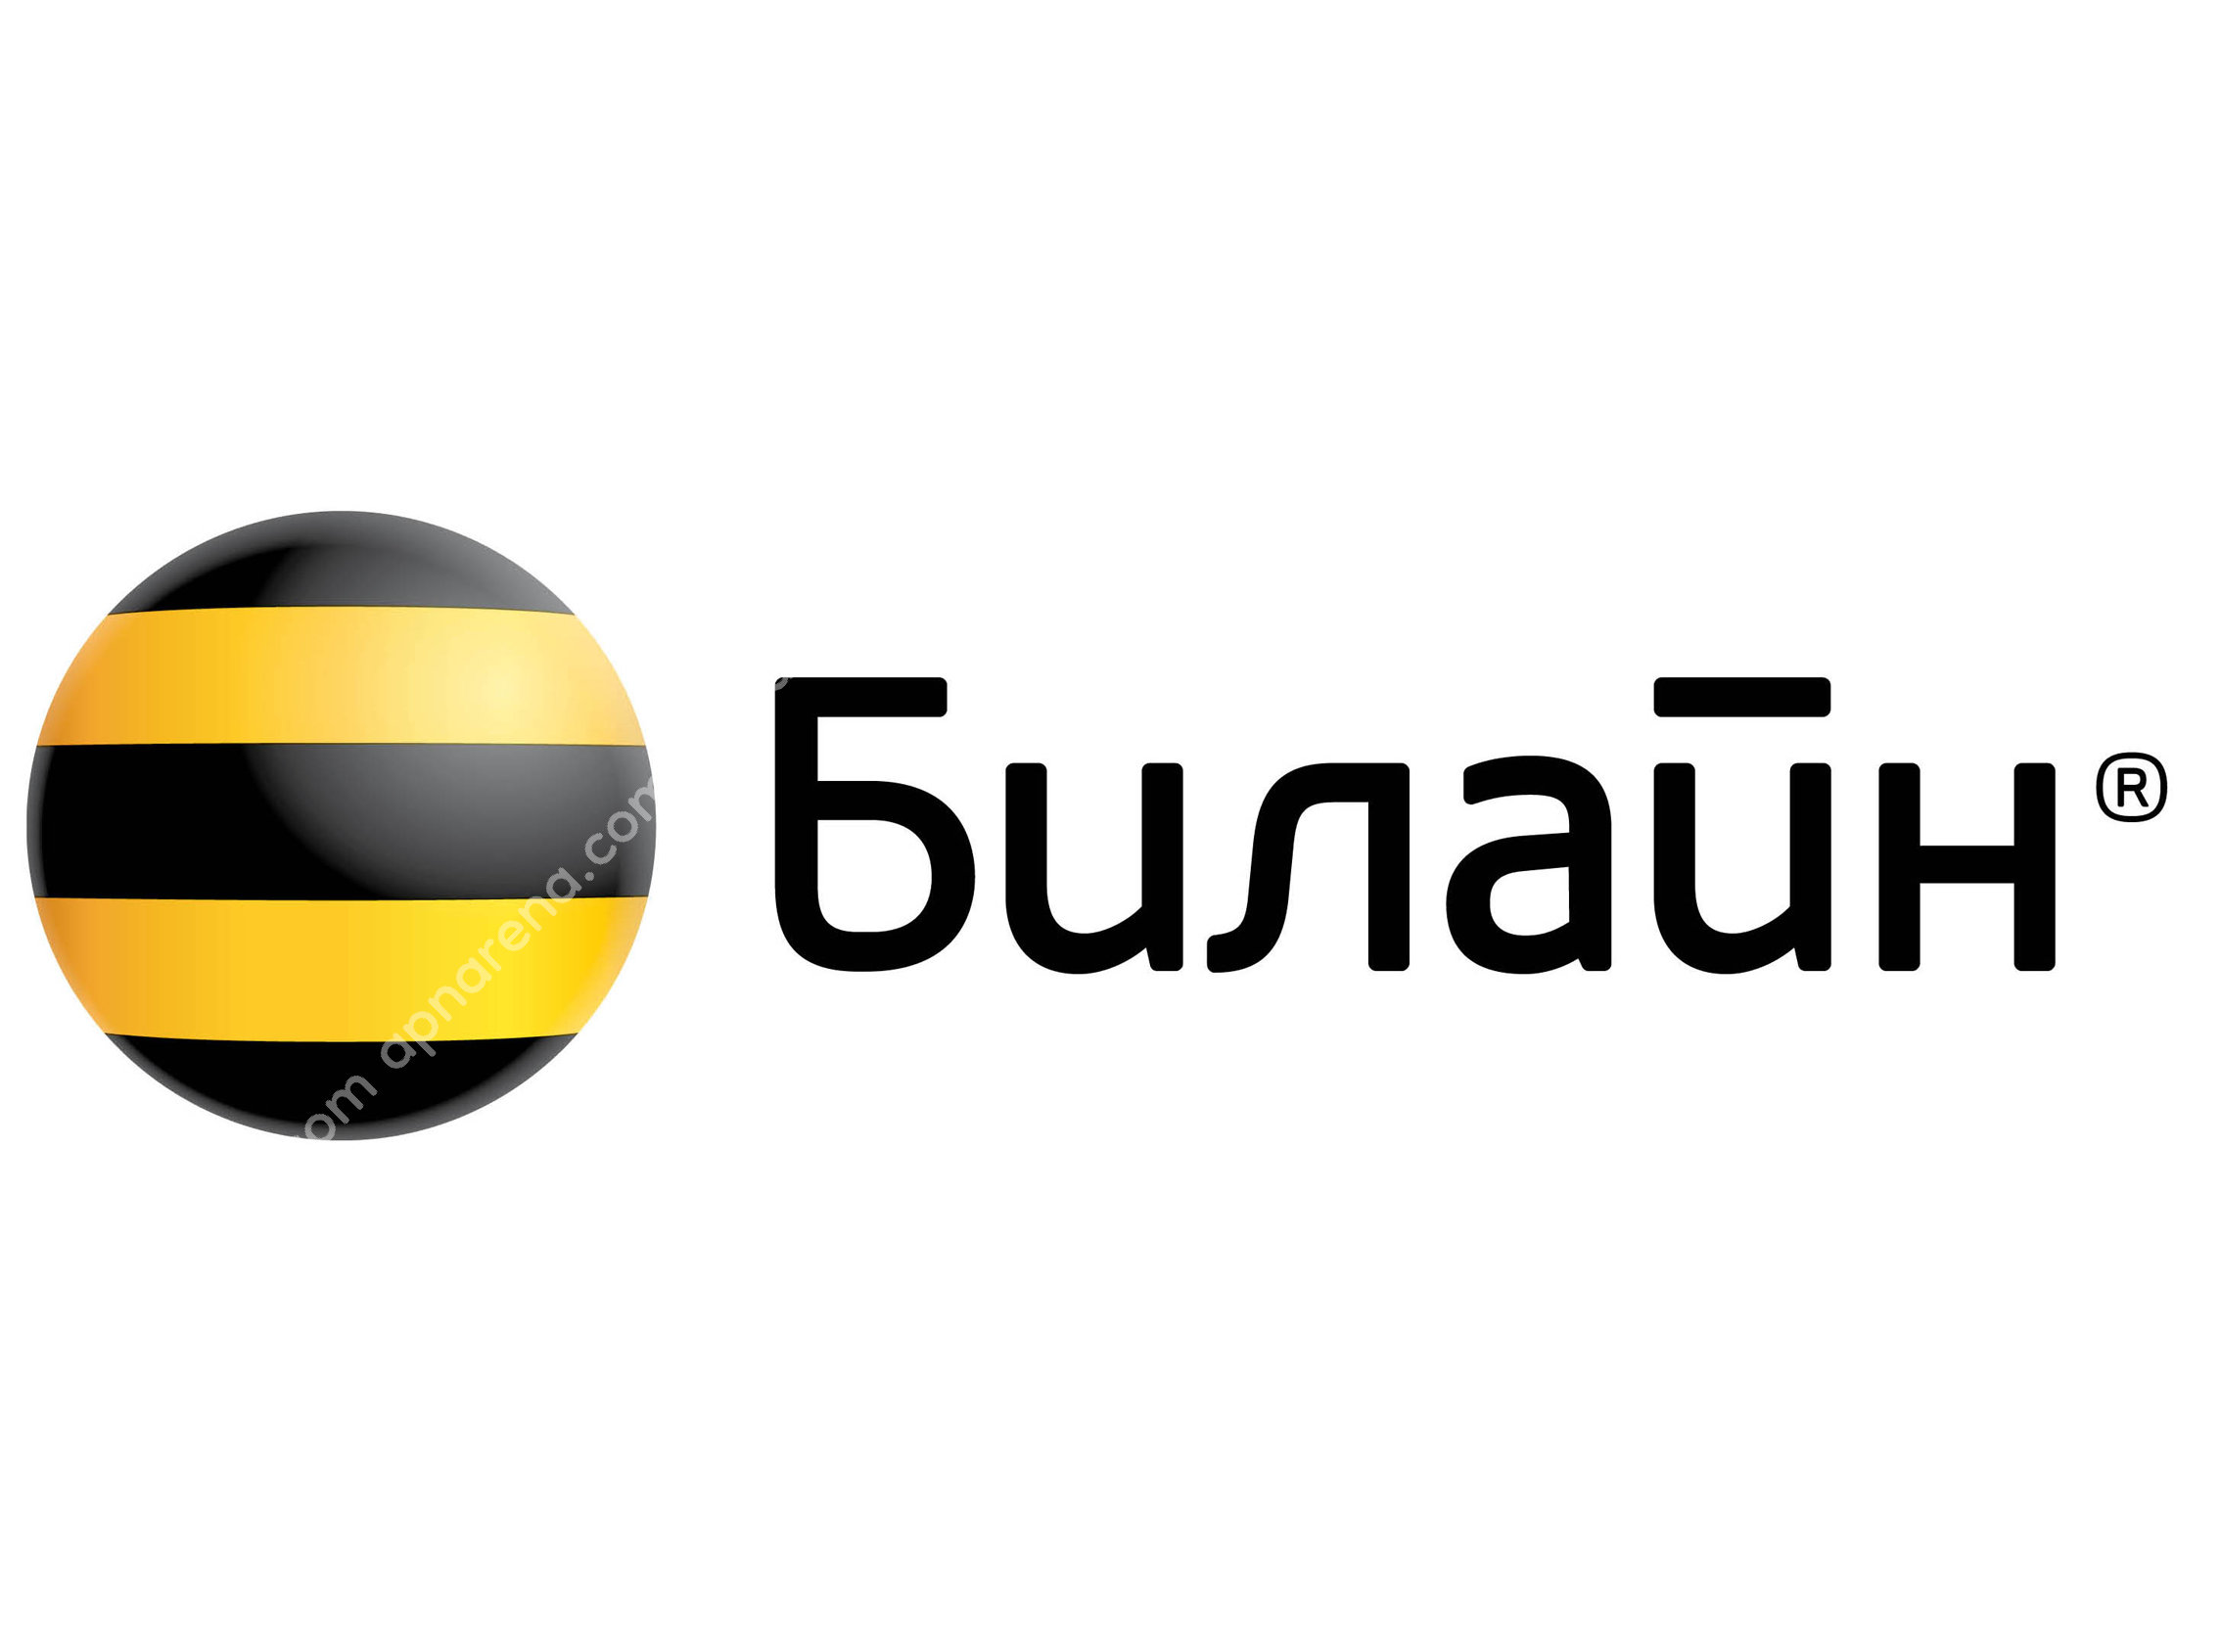 Beeline Russia APN Internet Settings Android iPhone